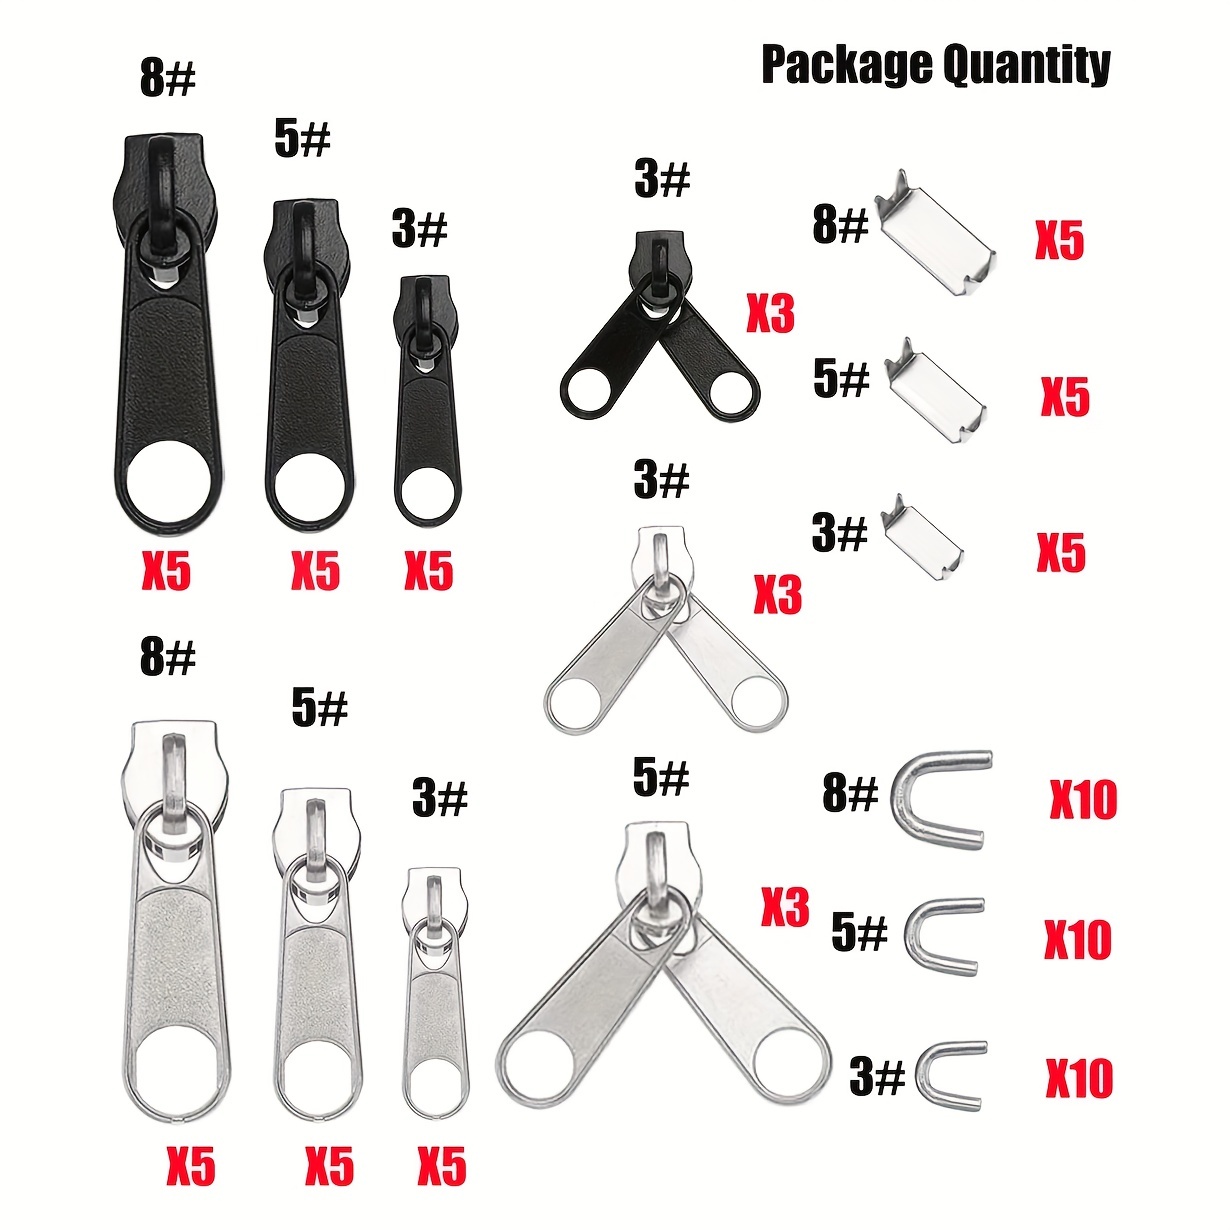 5 Coil Style Zipper Repair Kit